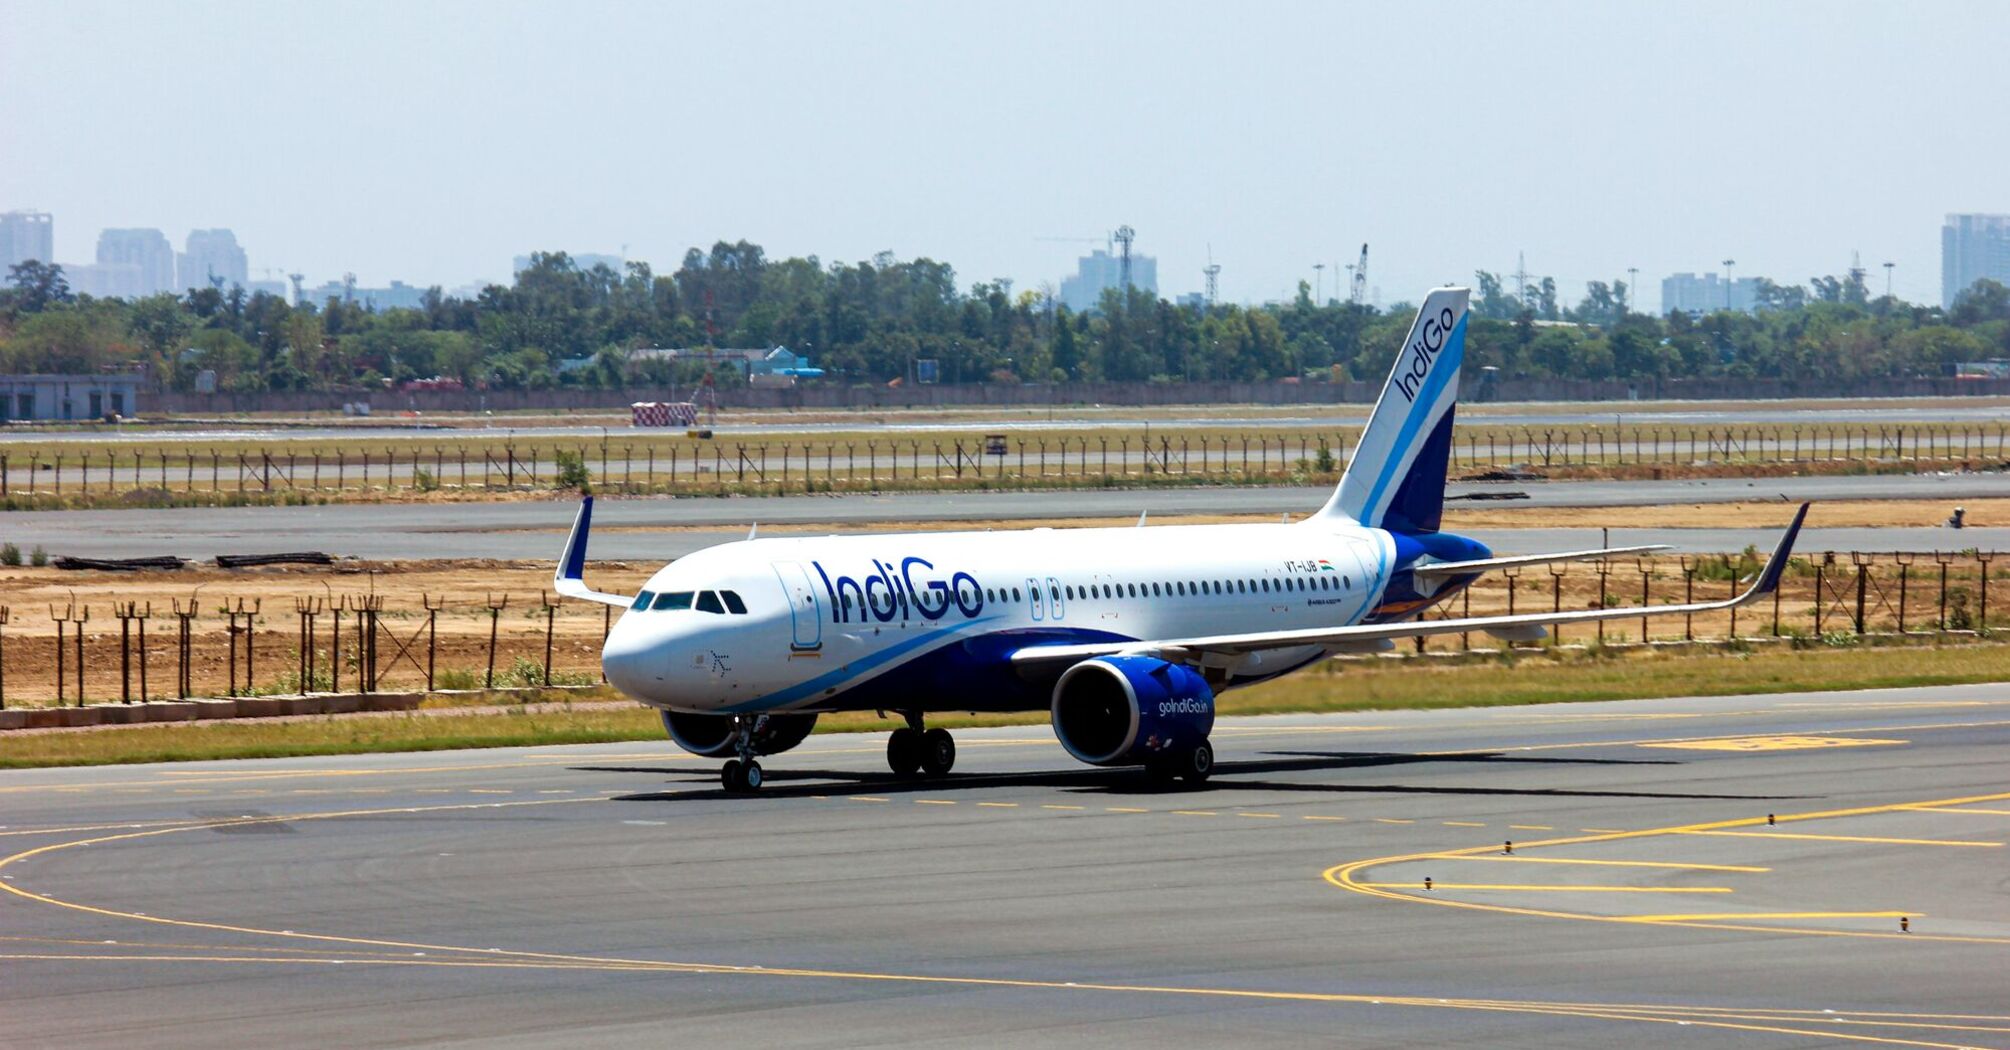 An IndiGo airline aircraft on the tarmac under a clear sky